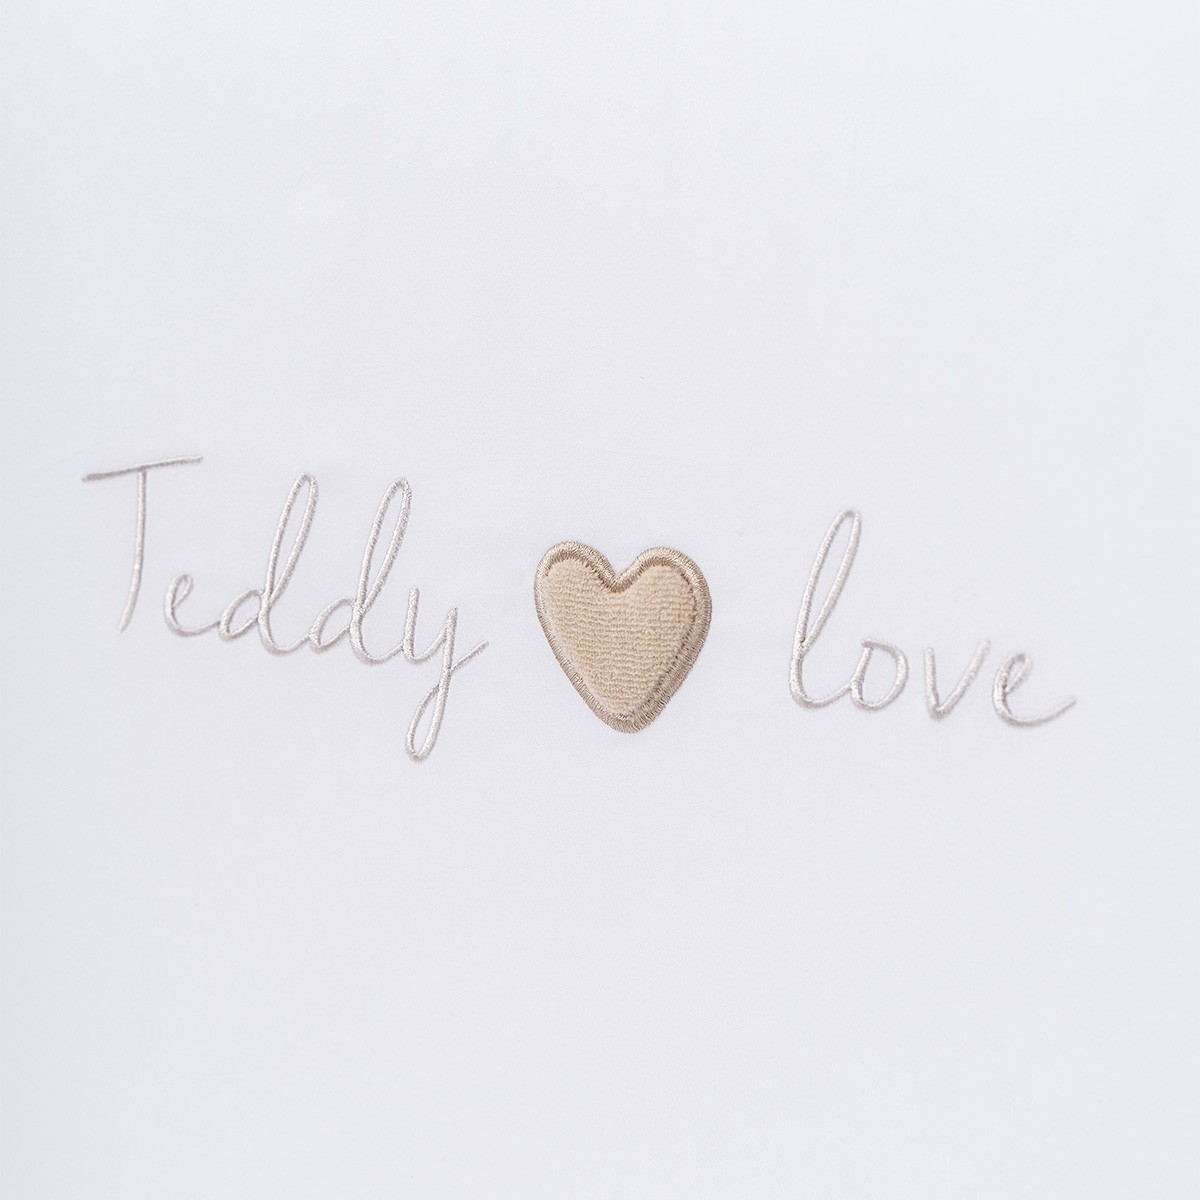 Perina Комплект в кроватку Teddy love (6 предметов)